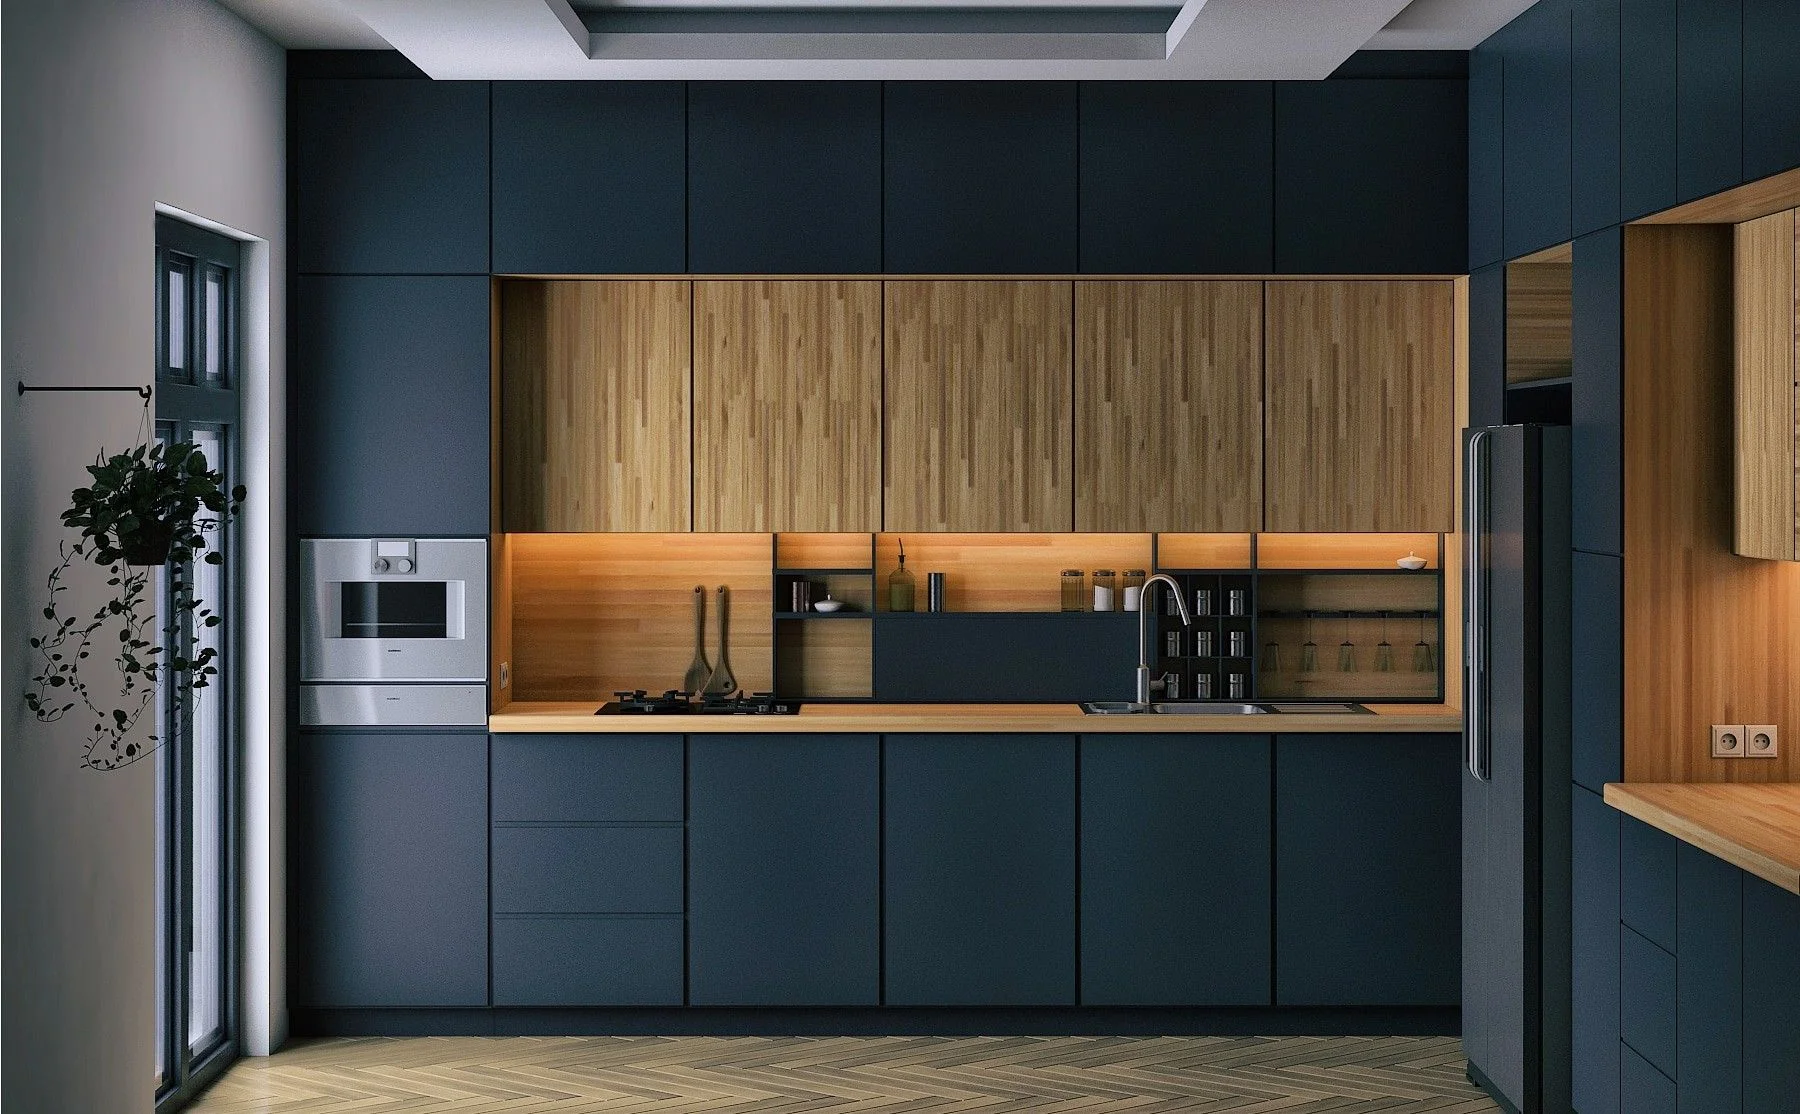 5 inspirational kitchen design ideas for an elegant outstanding